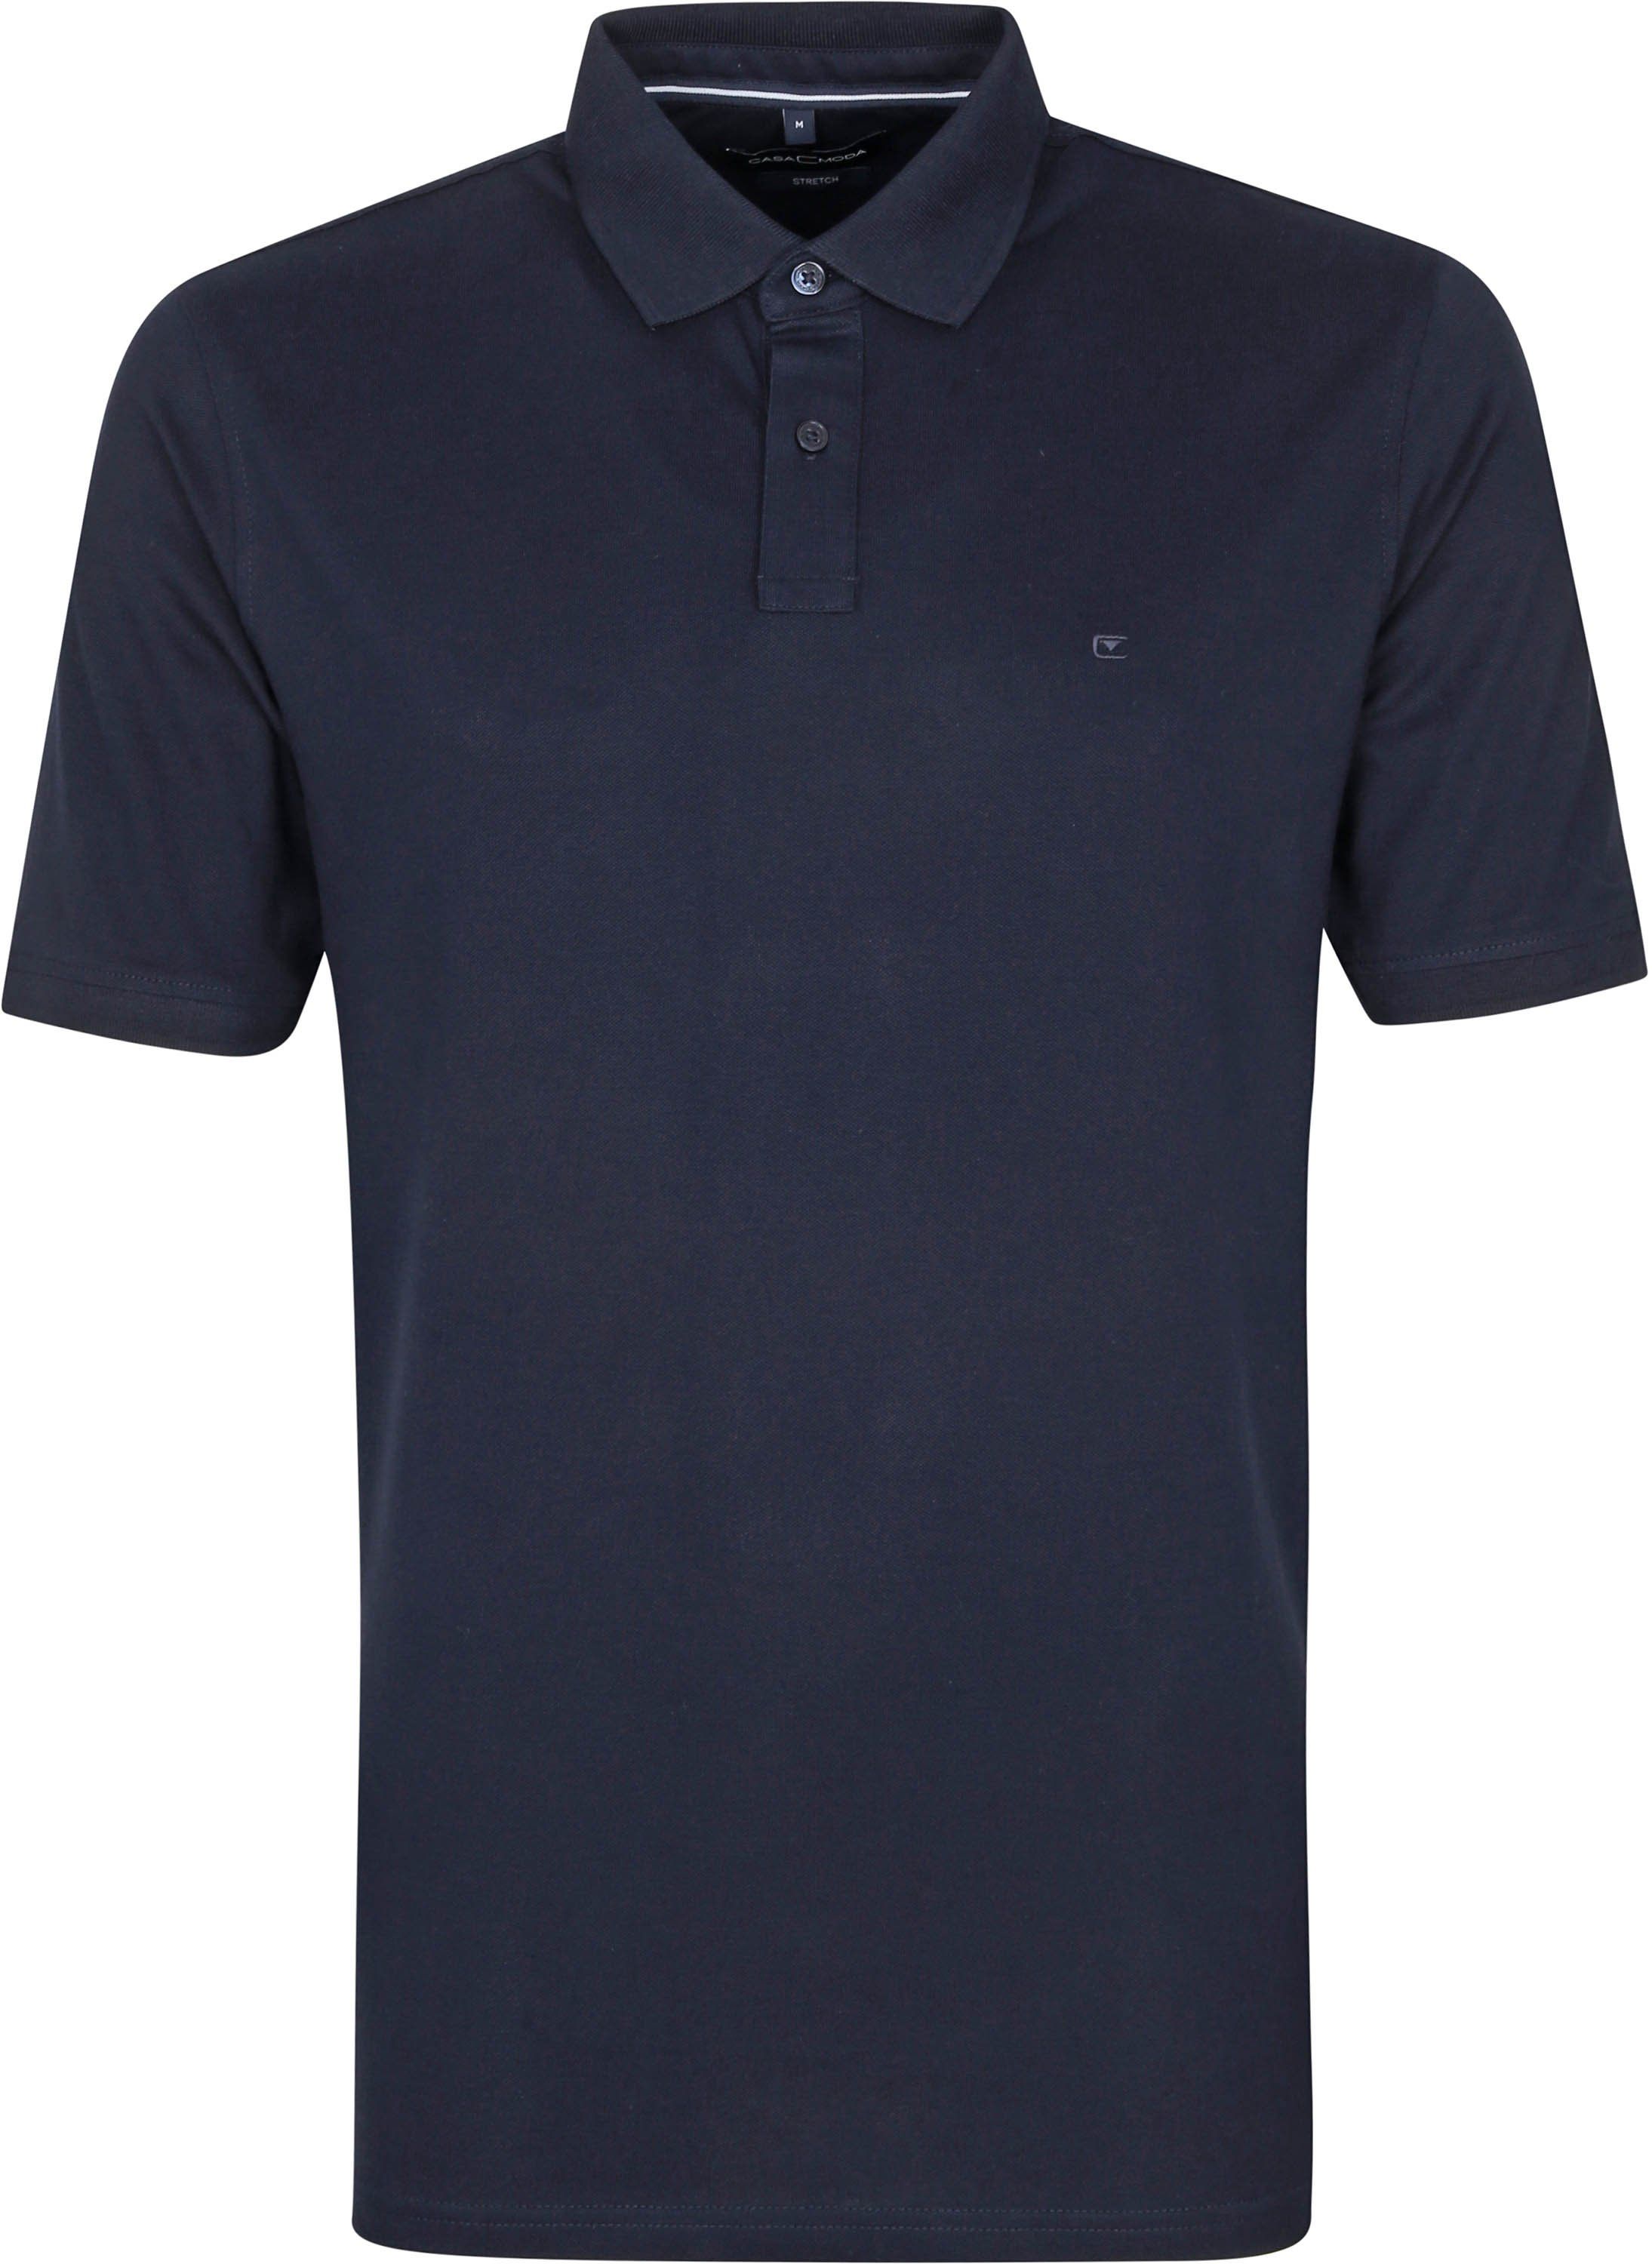 Casa Moda Polo Shirt Stretch Navy Blue Dark Blue size 5XL